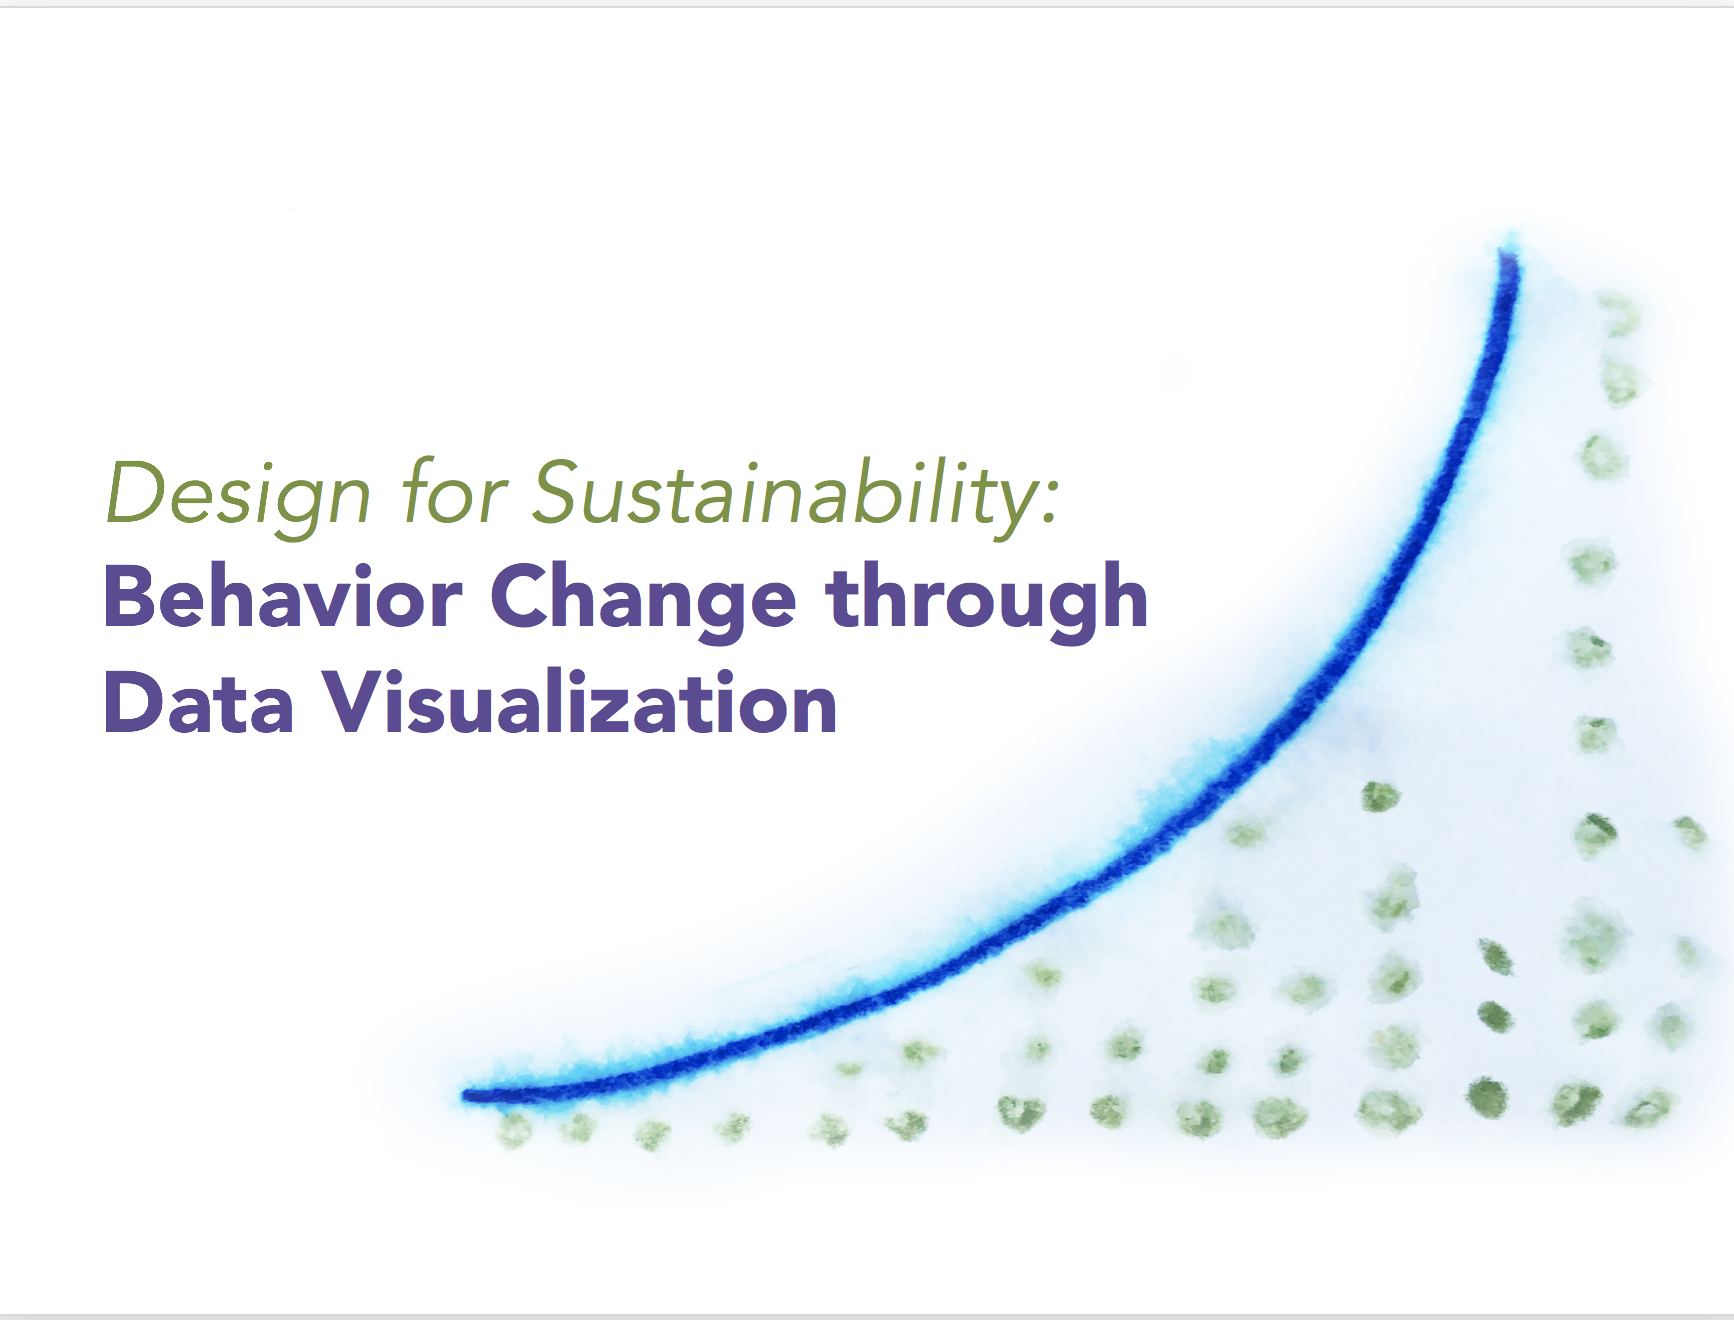 Title screen from Professor Egenhoefer's presentation titled "Design for Sustainability: Behavior Change Through Data Visualization"